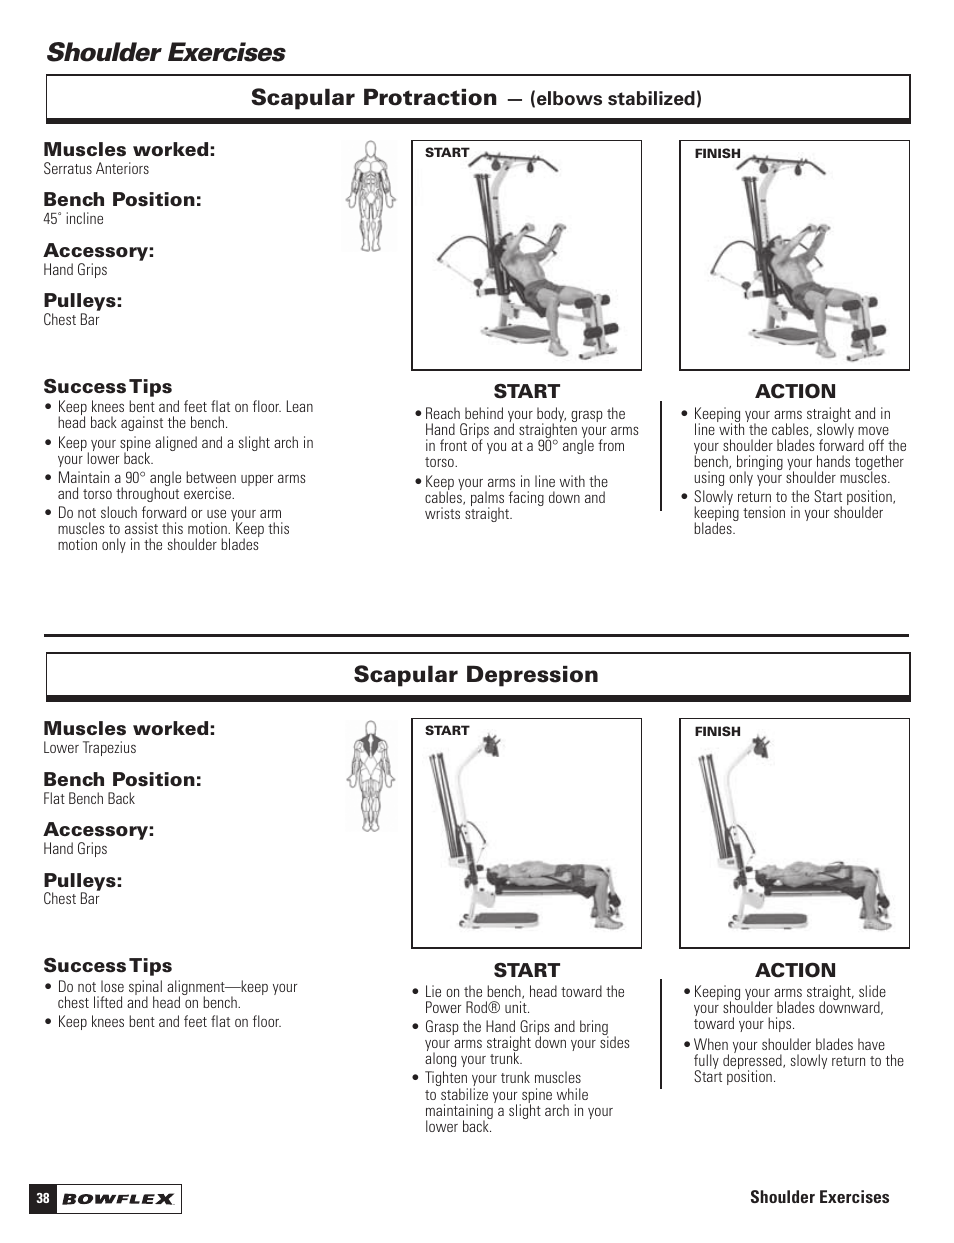 Shoulder exercises, Scapular protraction, Scapular depression | Bowflex